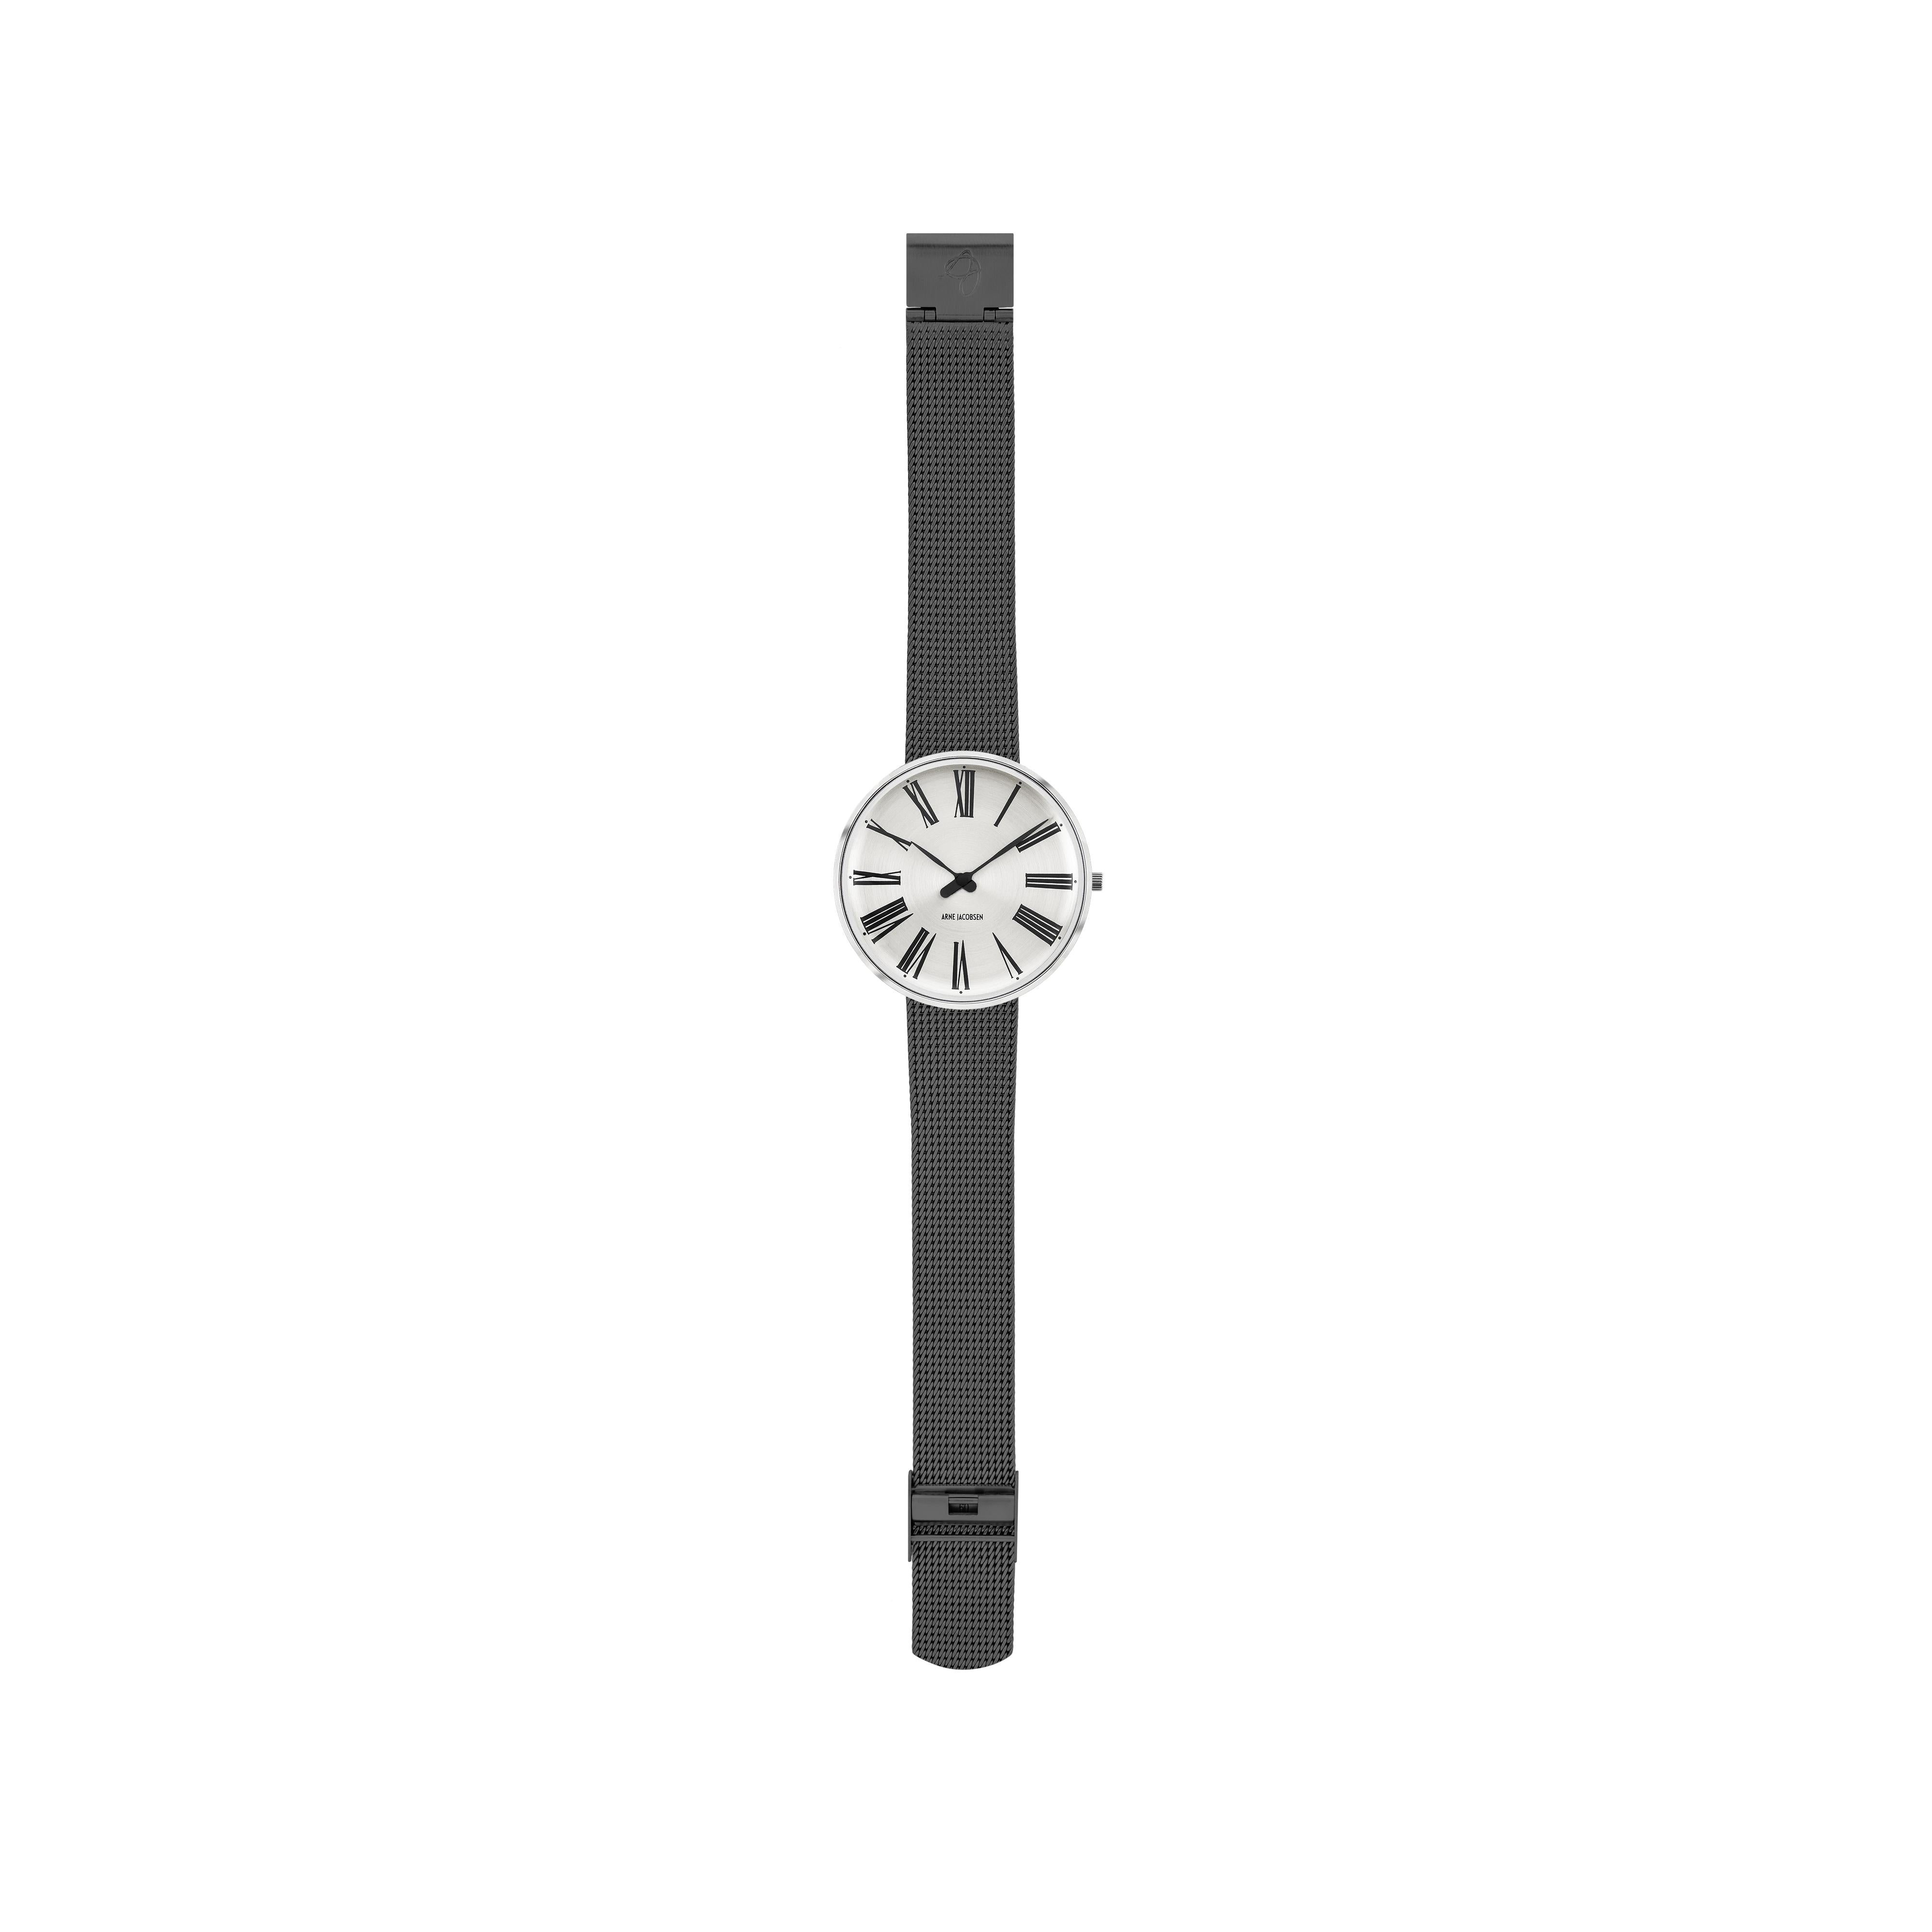 Arne Jacobsen Roman armband Watch Ø40, Sunray/Grey Mesh